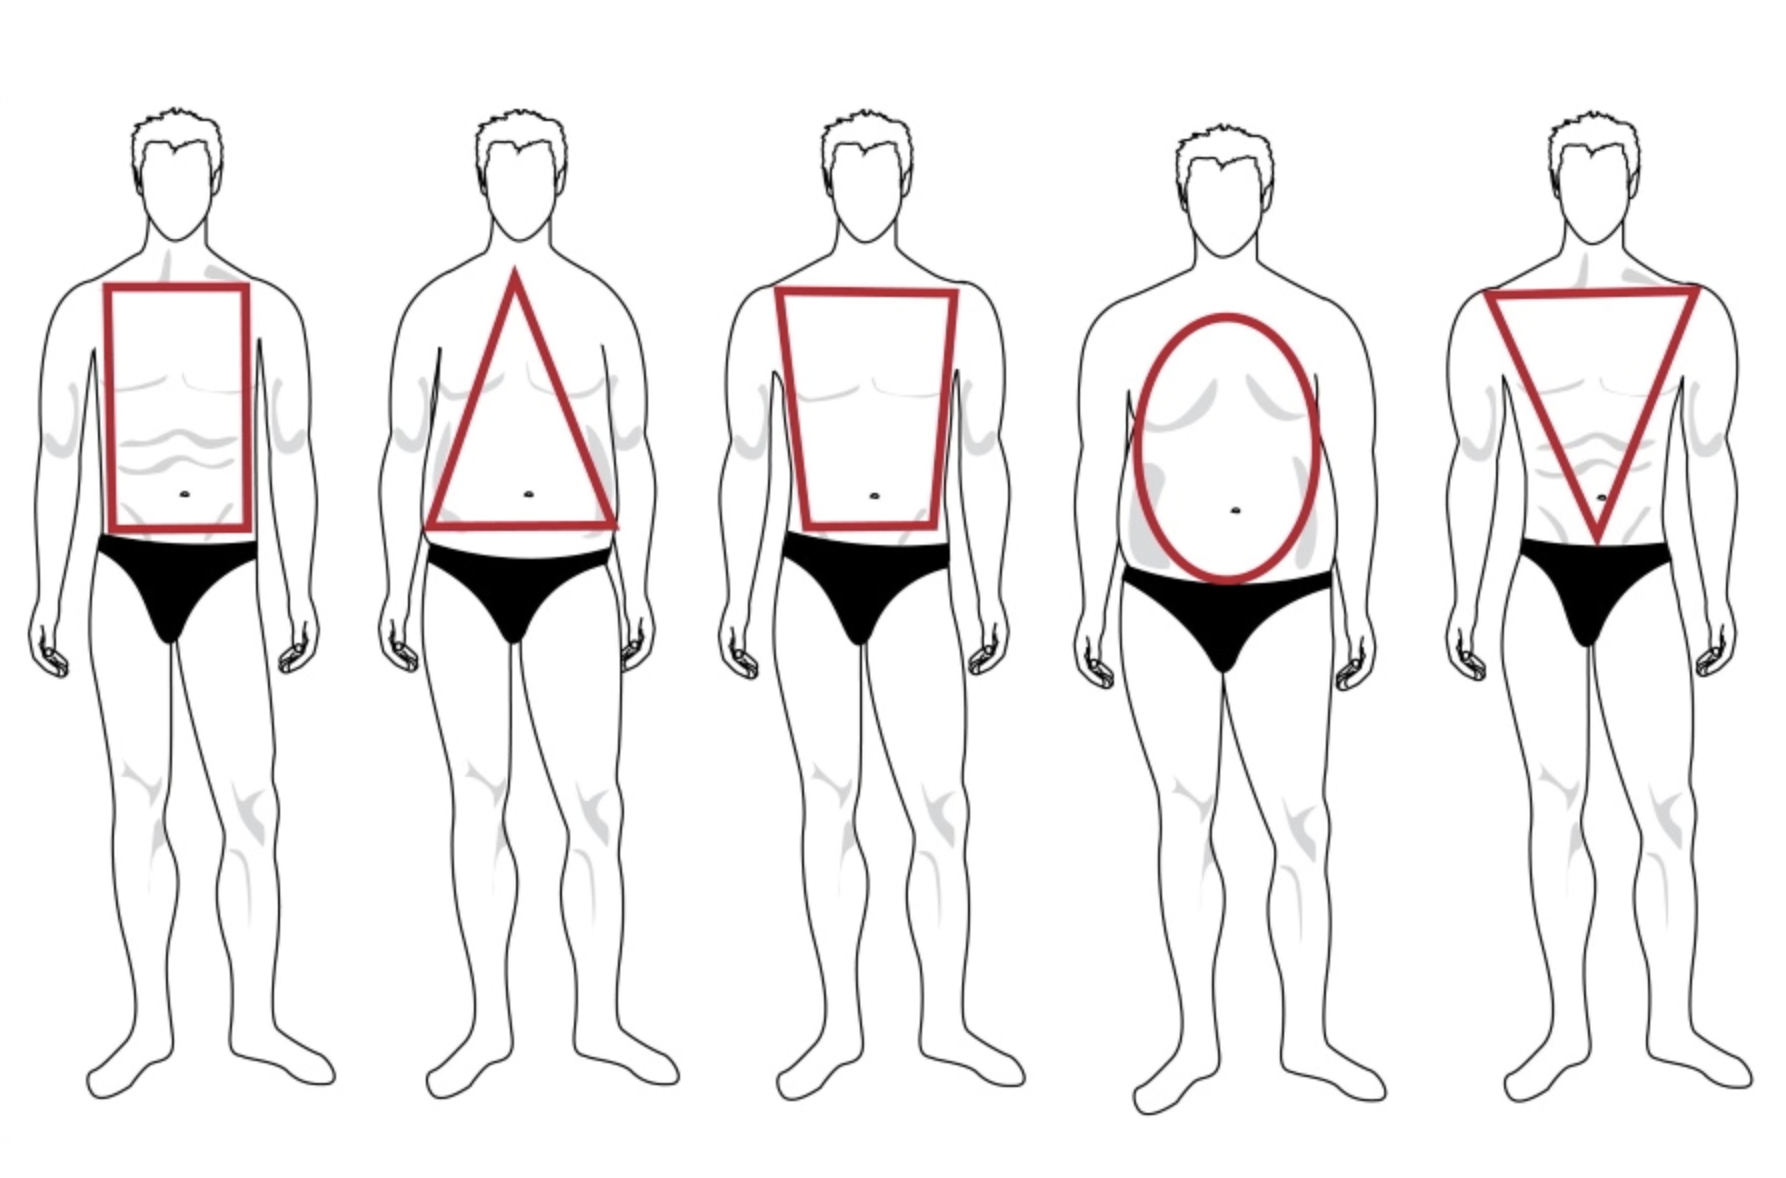 Типы телосложения у мужчин. Виды мужских фигур. Типы фигур у мужчин. Основные типы мужской фигуры.